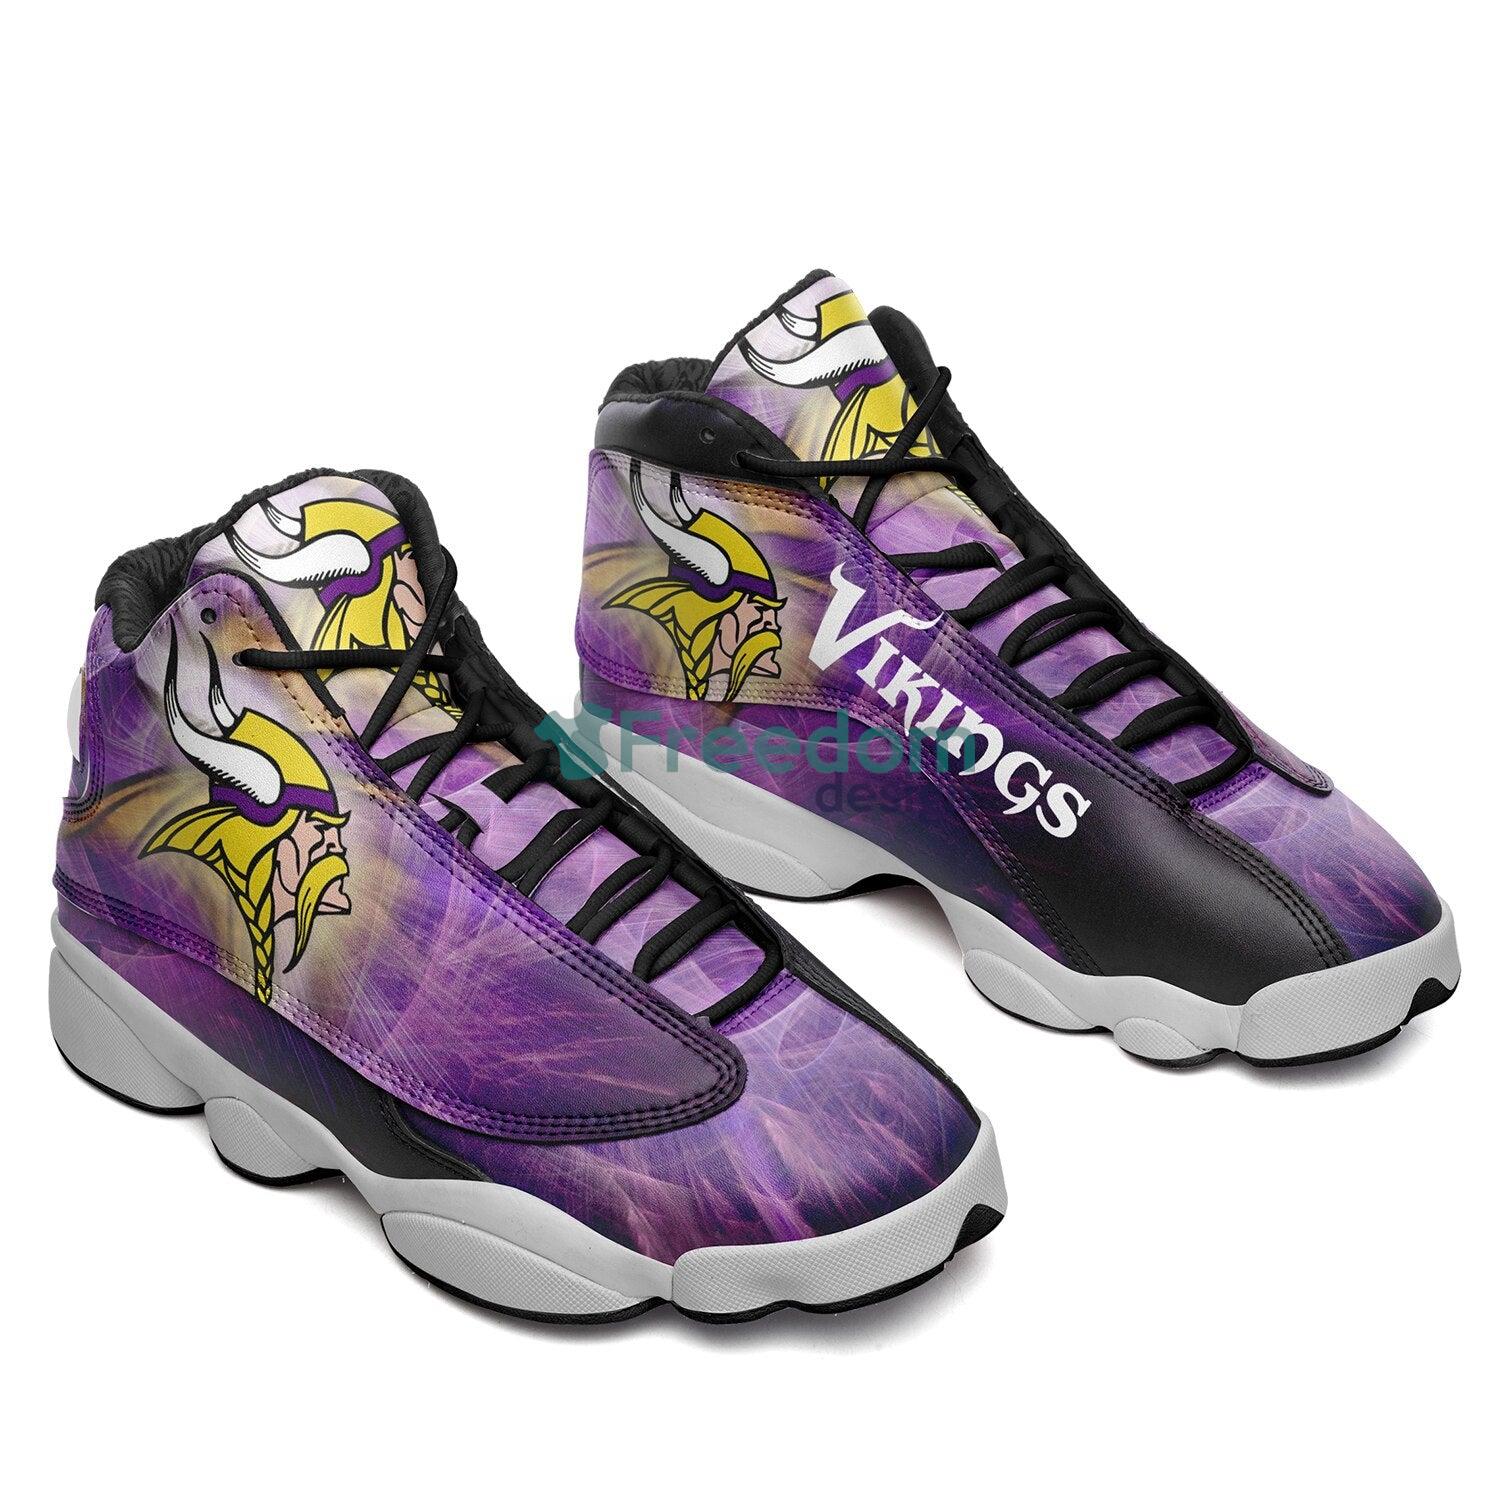 Minnesota Vikings Team Air Jordan 13 Sneaker Shoes For Fans